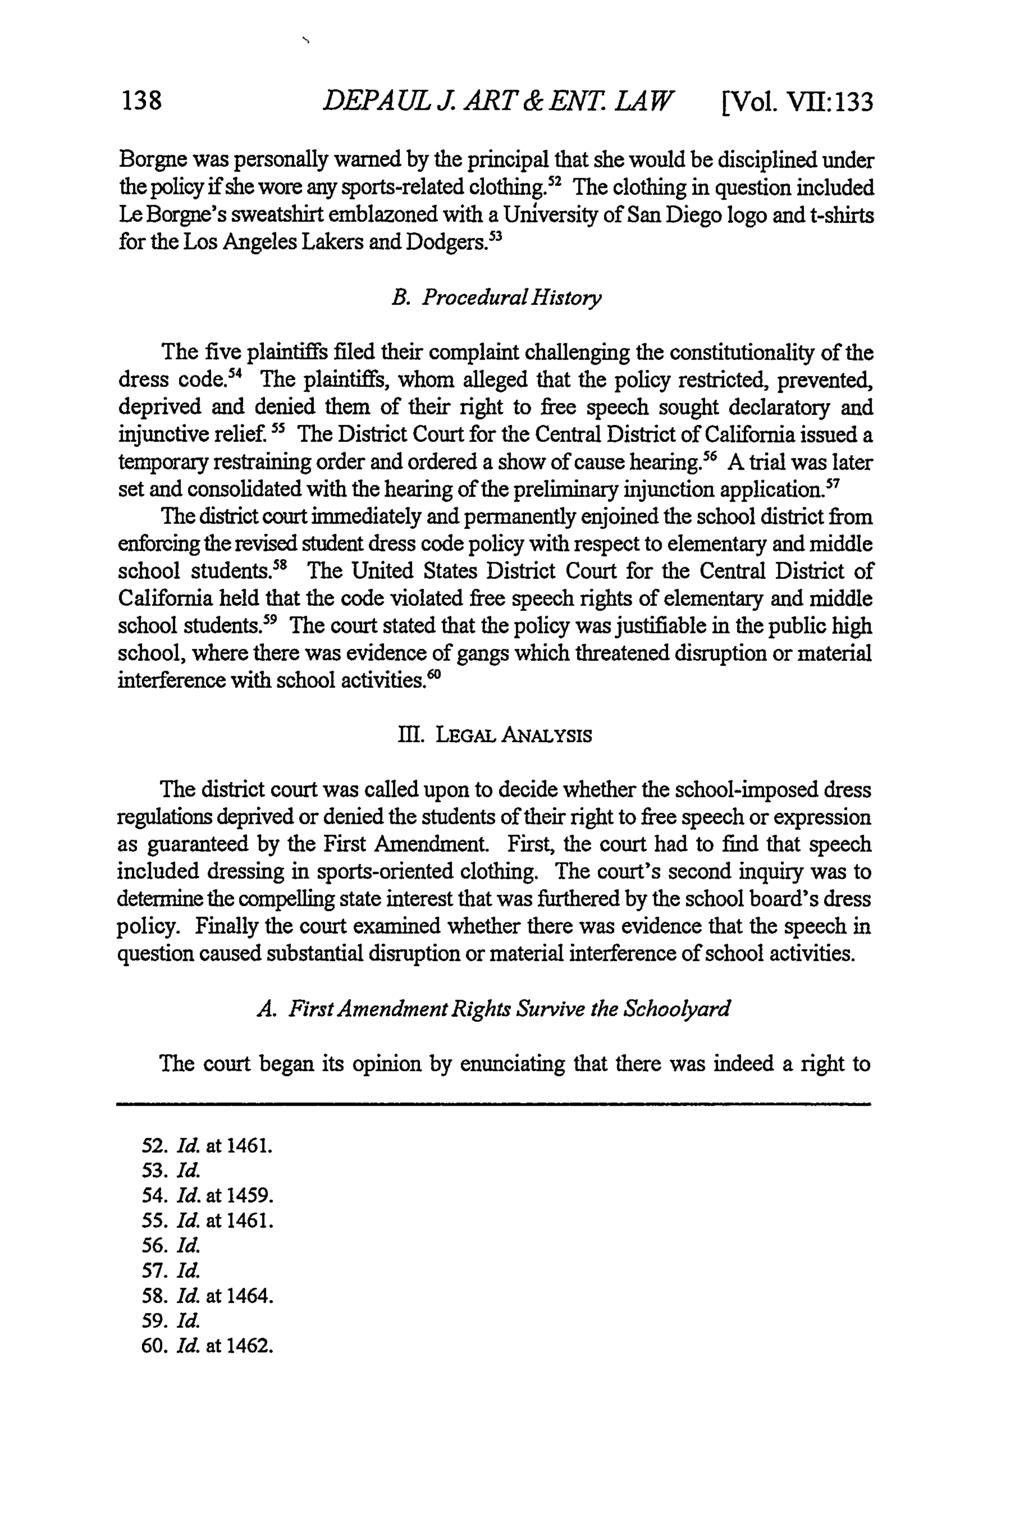 DePaul Journal of Art, Technology & Intellectual Property Law, Vol. 7, Iss. 1 [], Art. 6 DEPAULJART&ENT LAW [Vol.